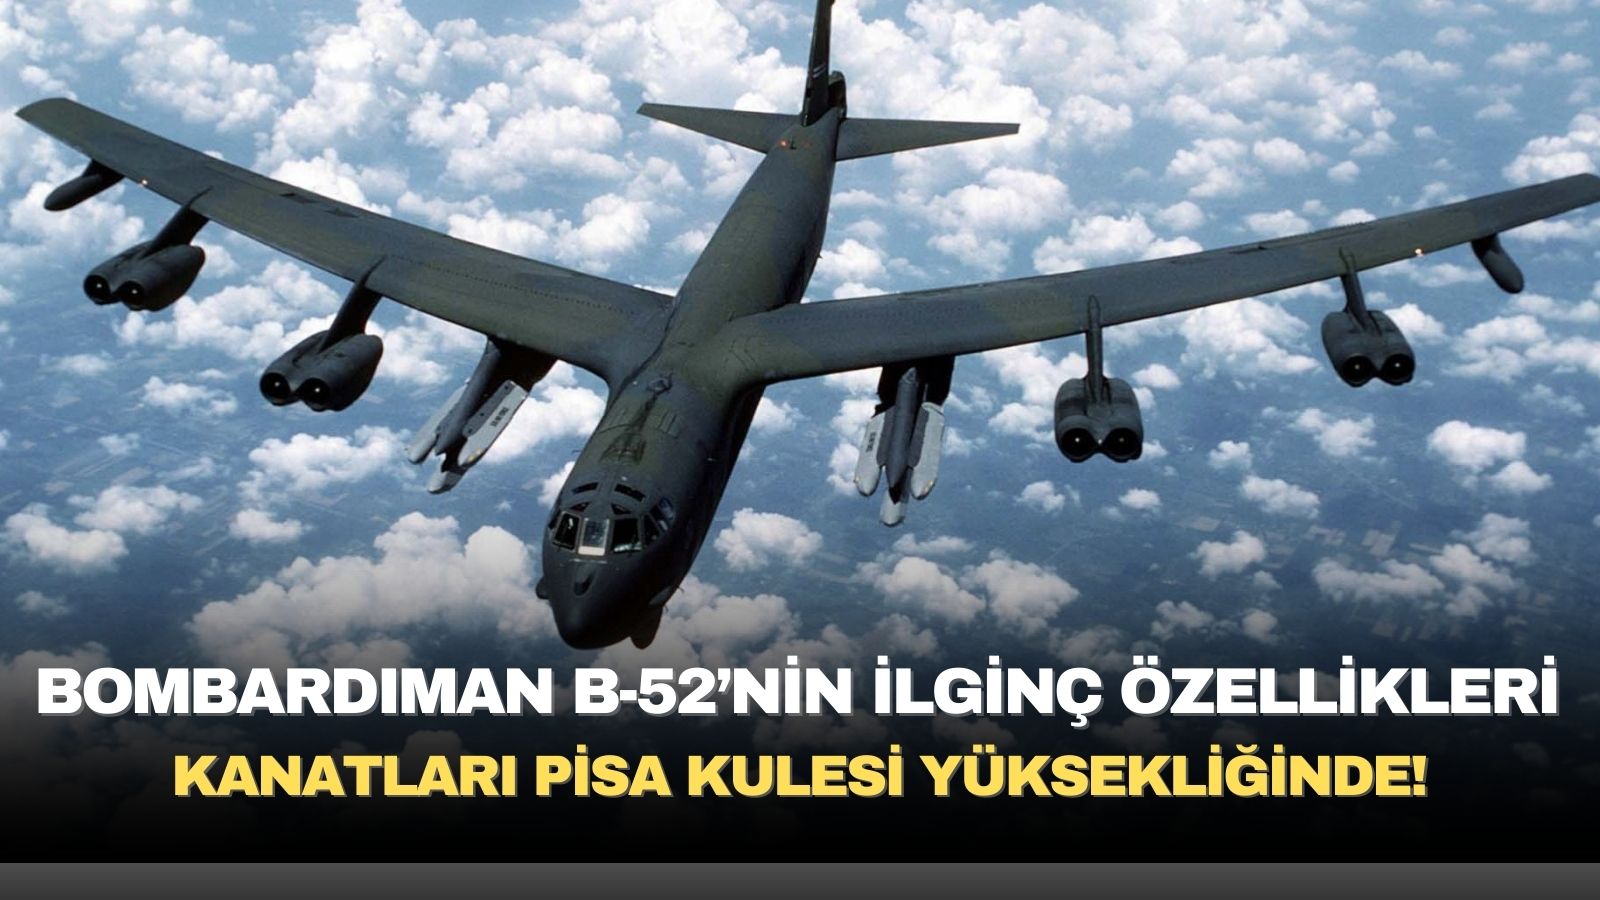 bombardiman-ucagi-b-52nin-en-tuhaf-ozellikleri